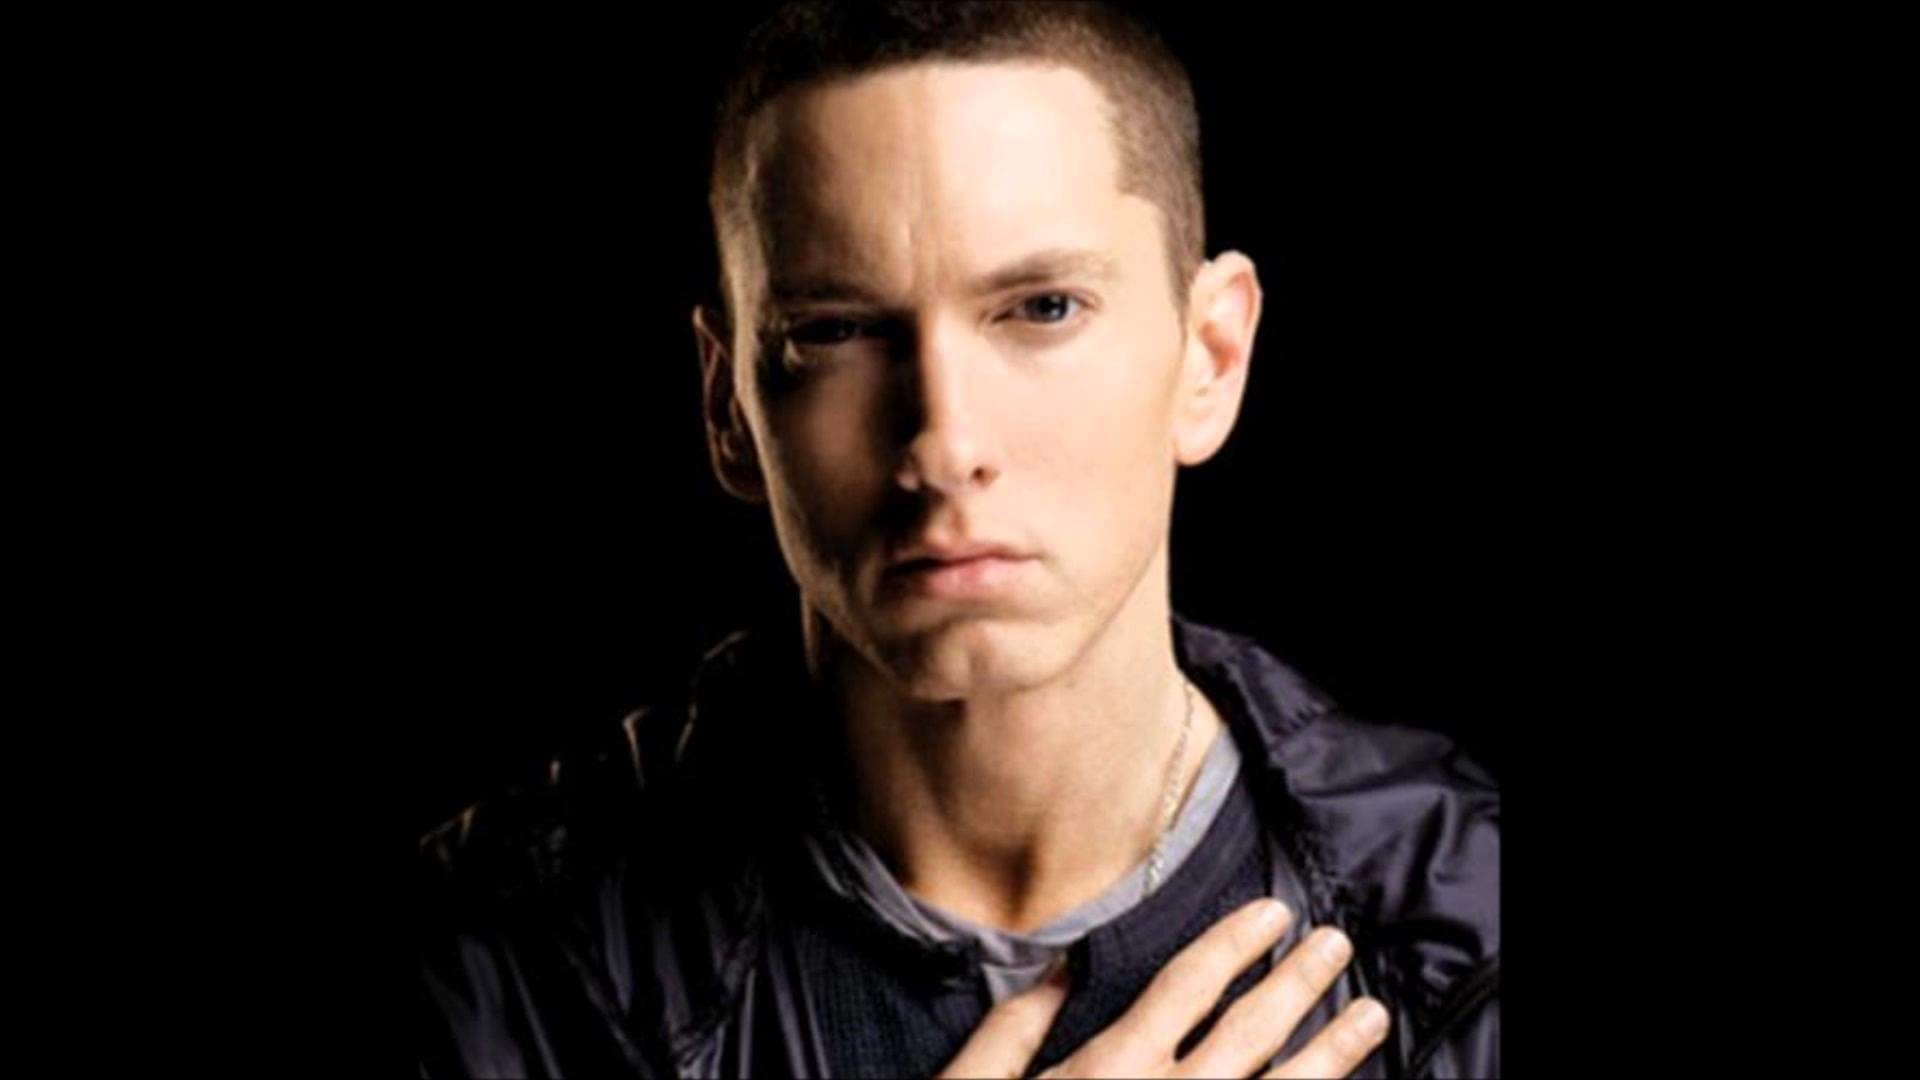 Eminem Wallpaper HD Image